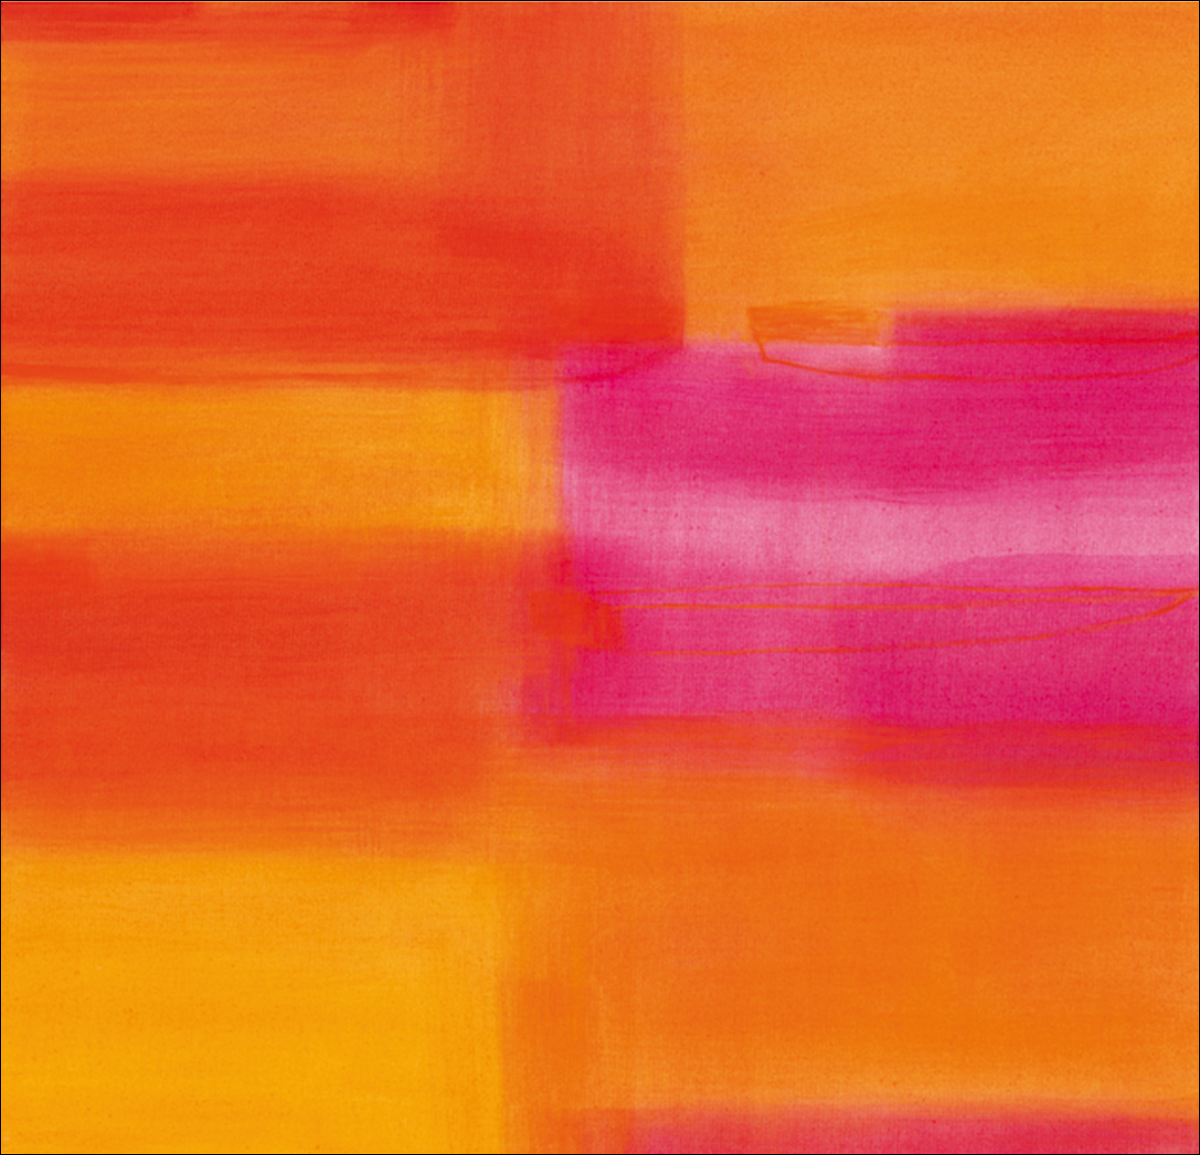 STÄHLI Susanne: Untitled orange, 2004